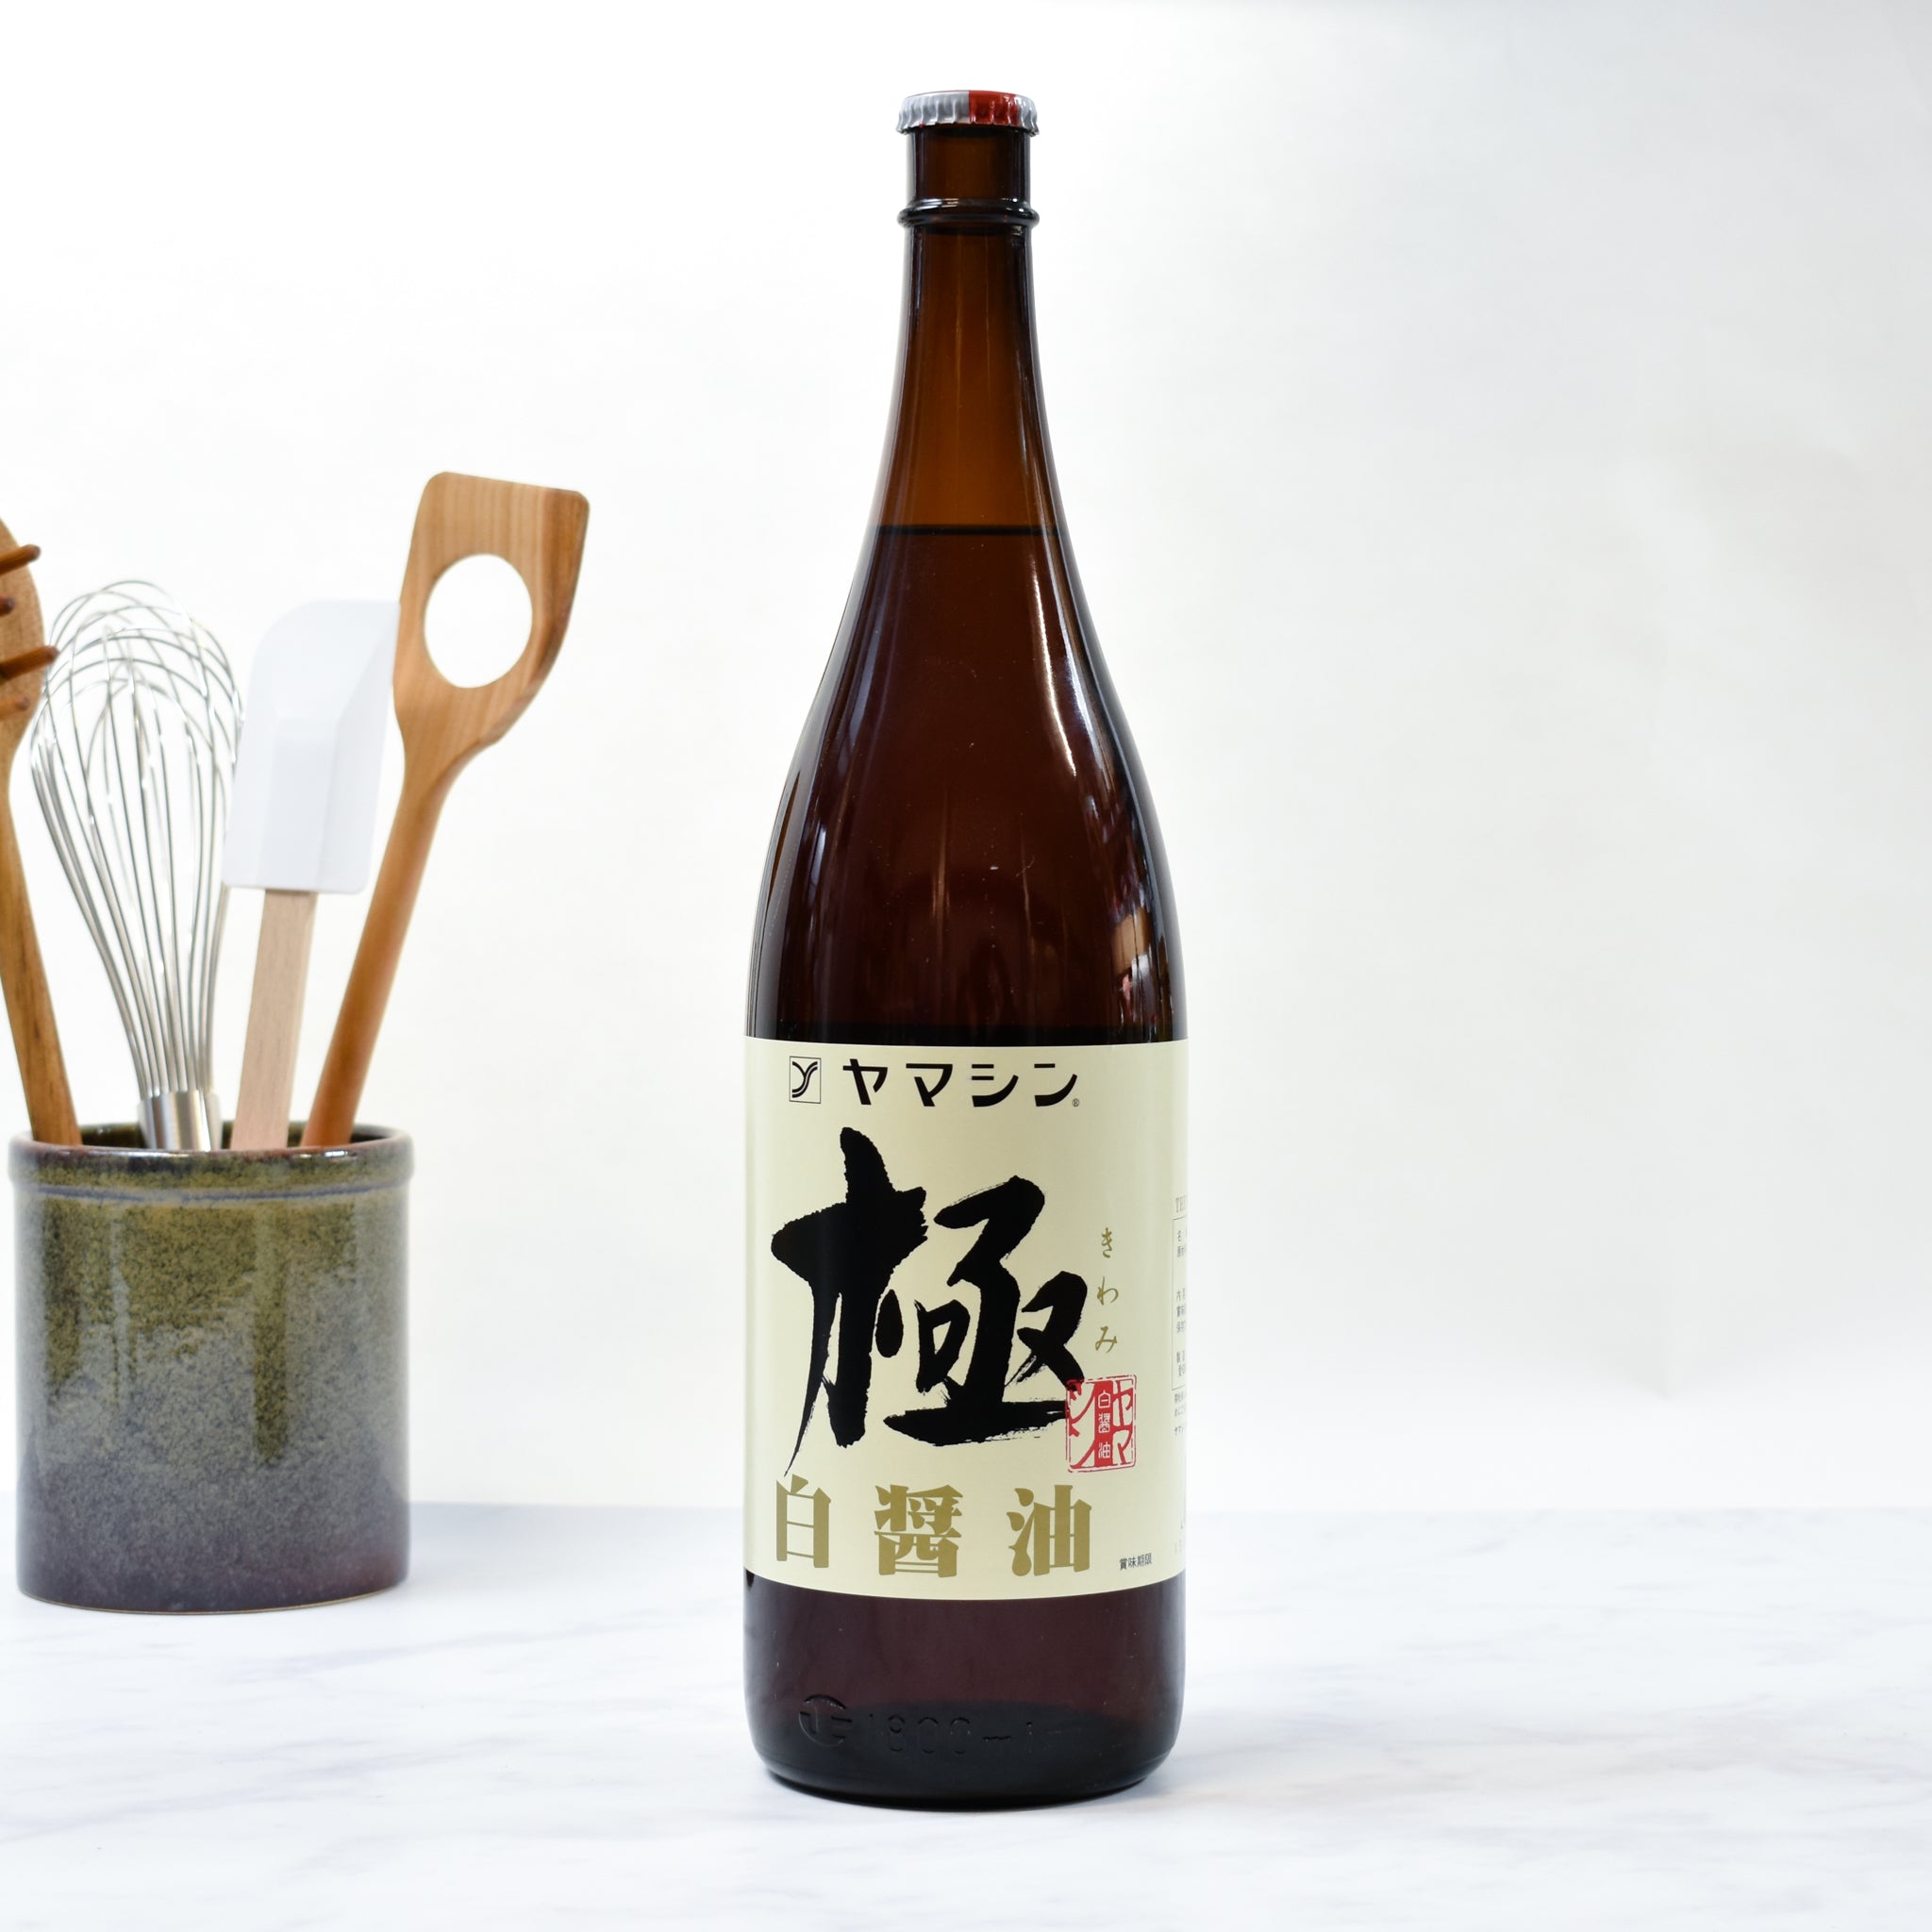 White Soy Sauce - Yamashin Shiro Shoyu 1.8l lifestyle photograph